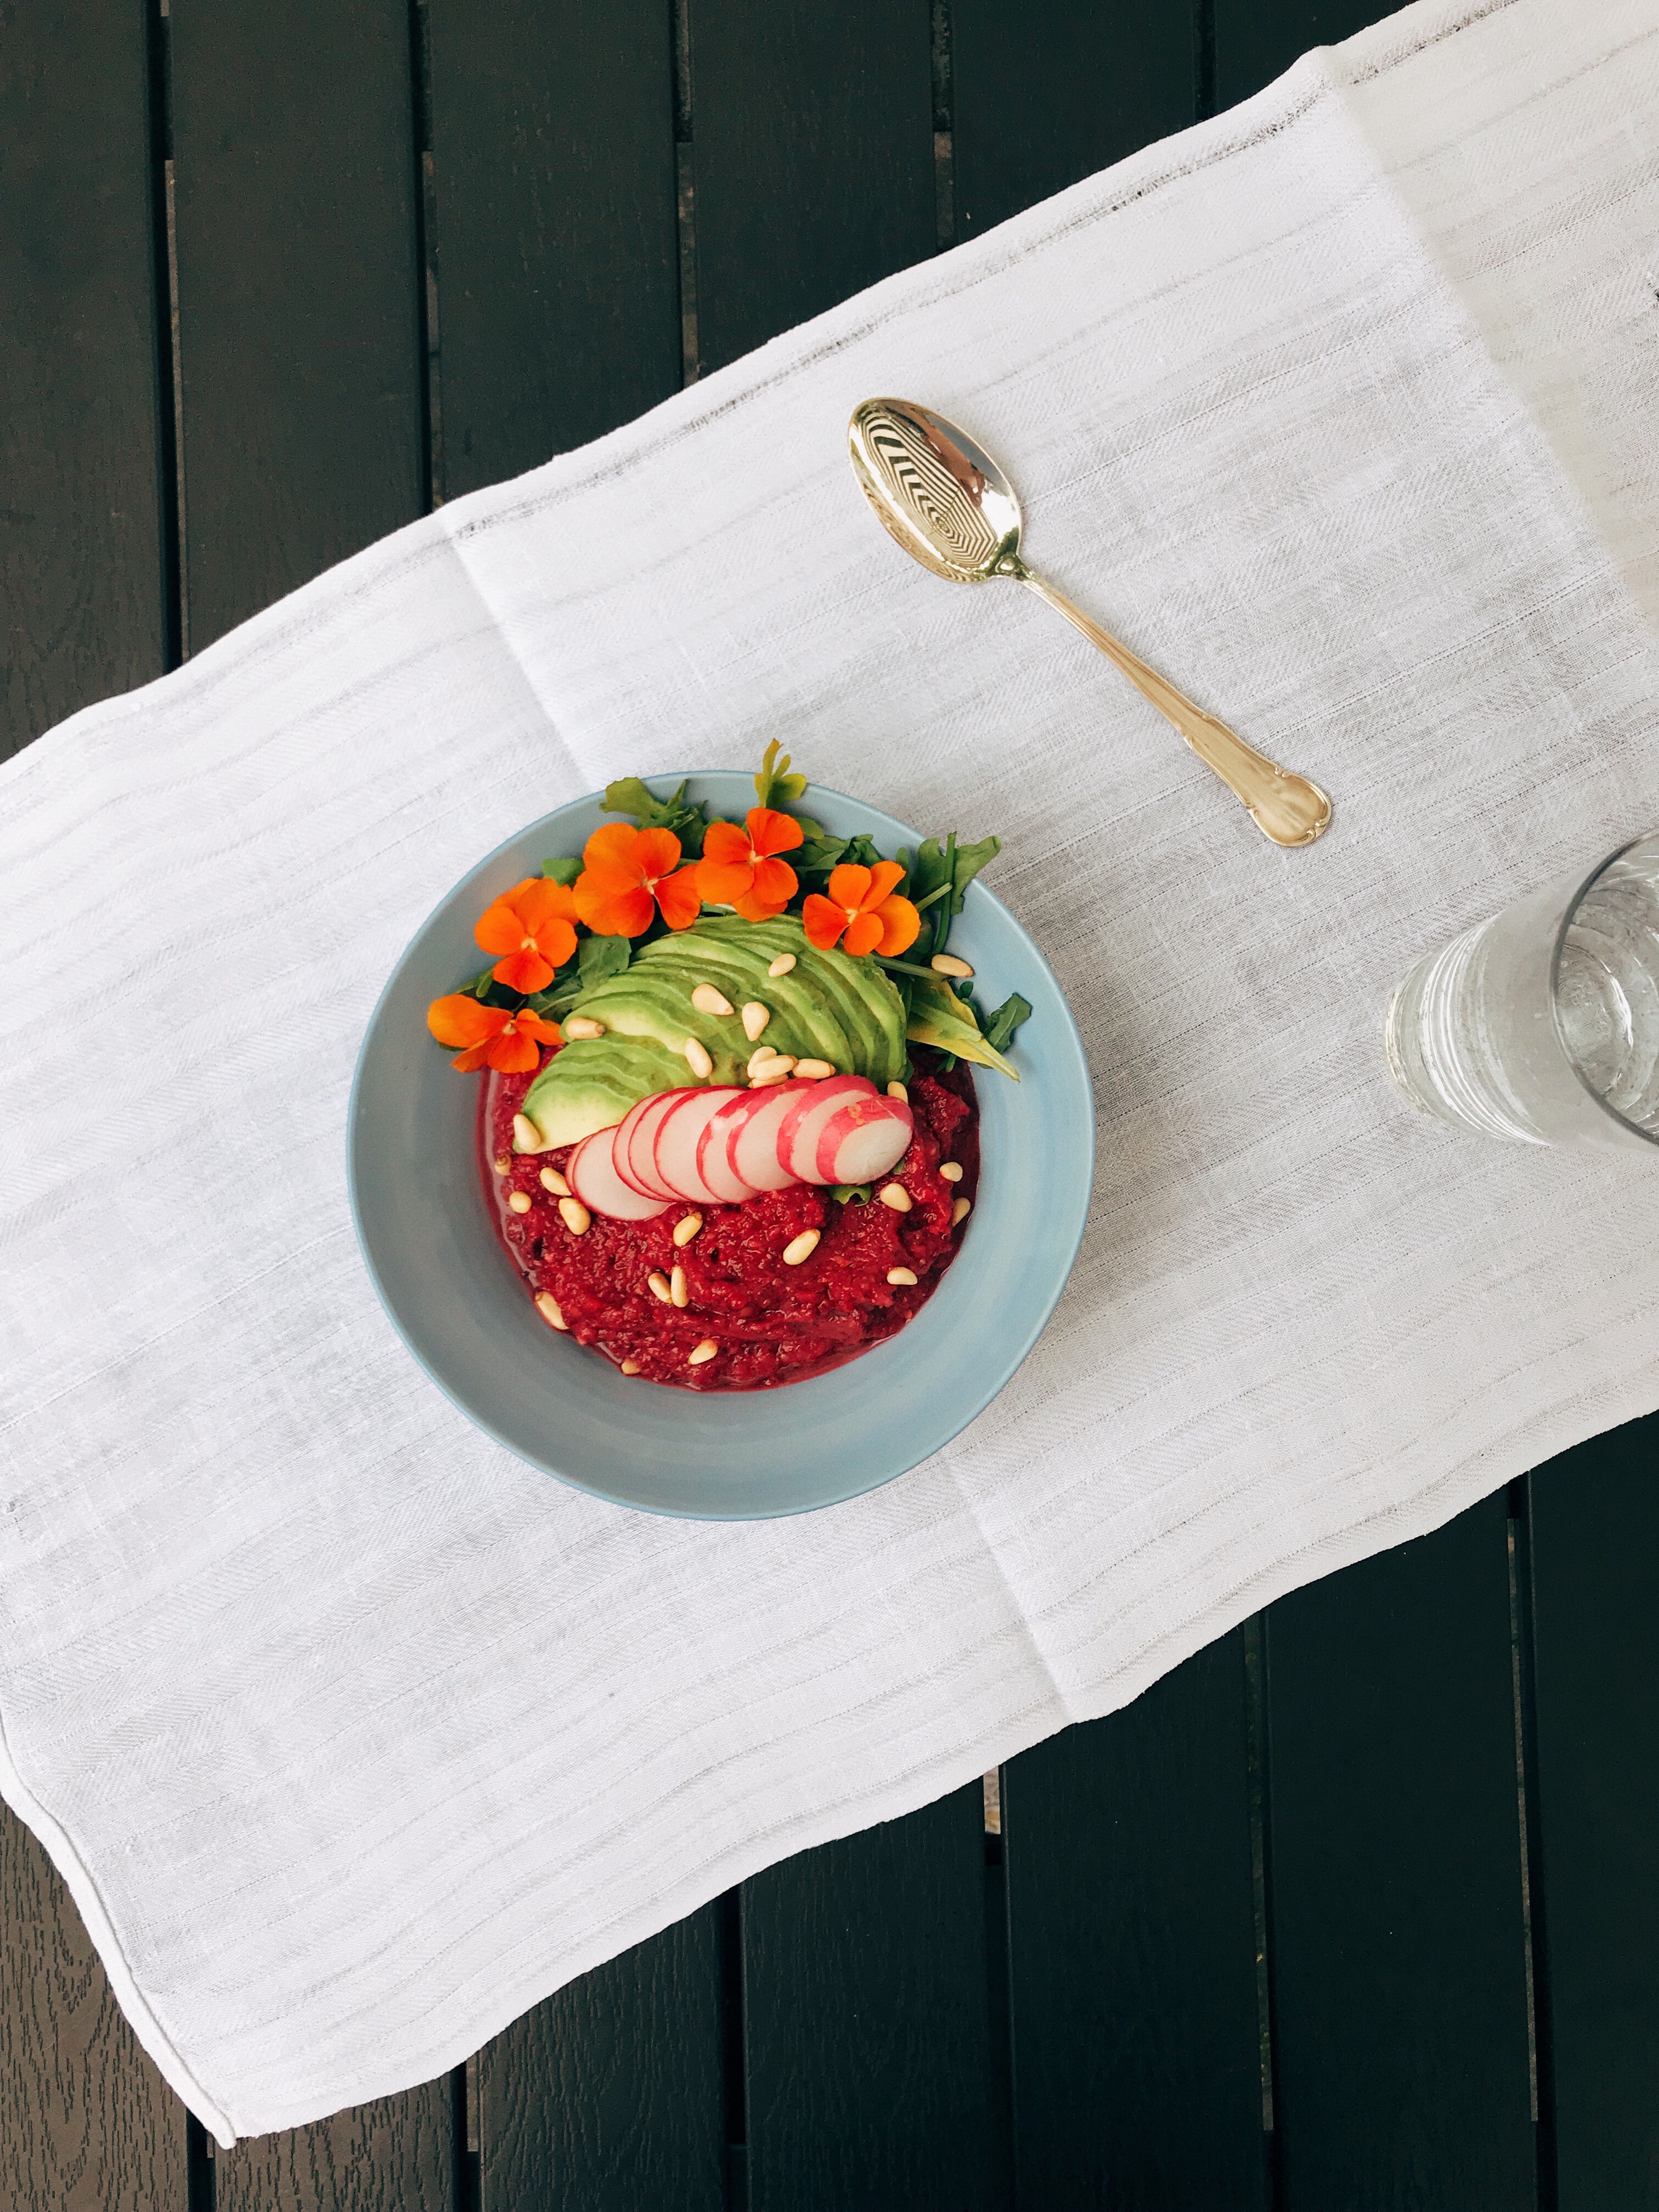 Rainbow Beet Gazpacho Vegan Smoothie Bowl Healthy Recipes RG Daily Blog